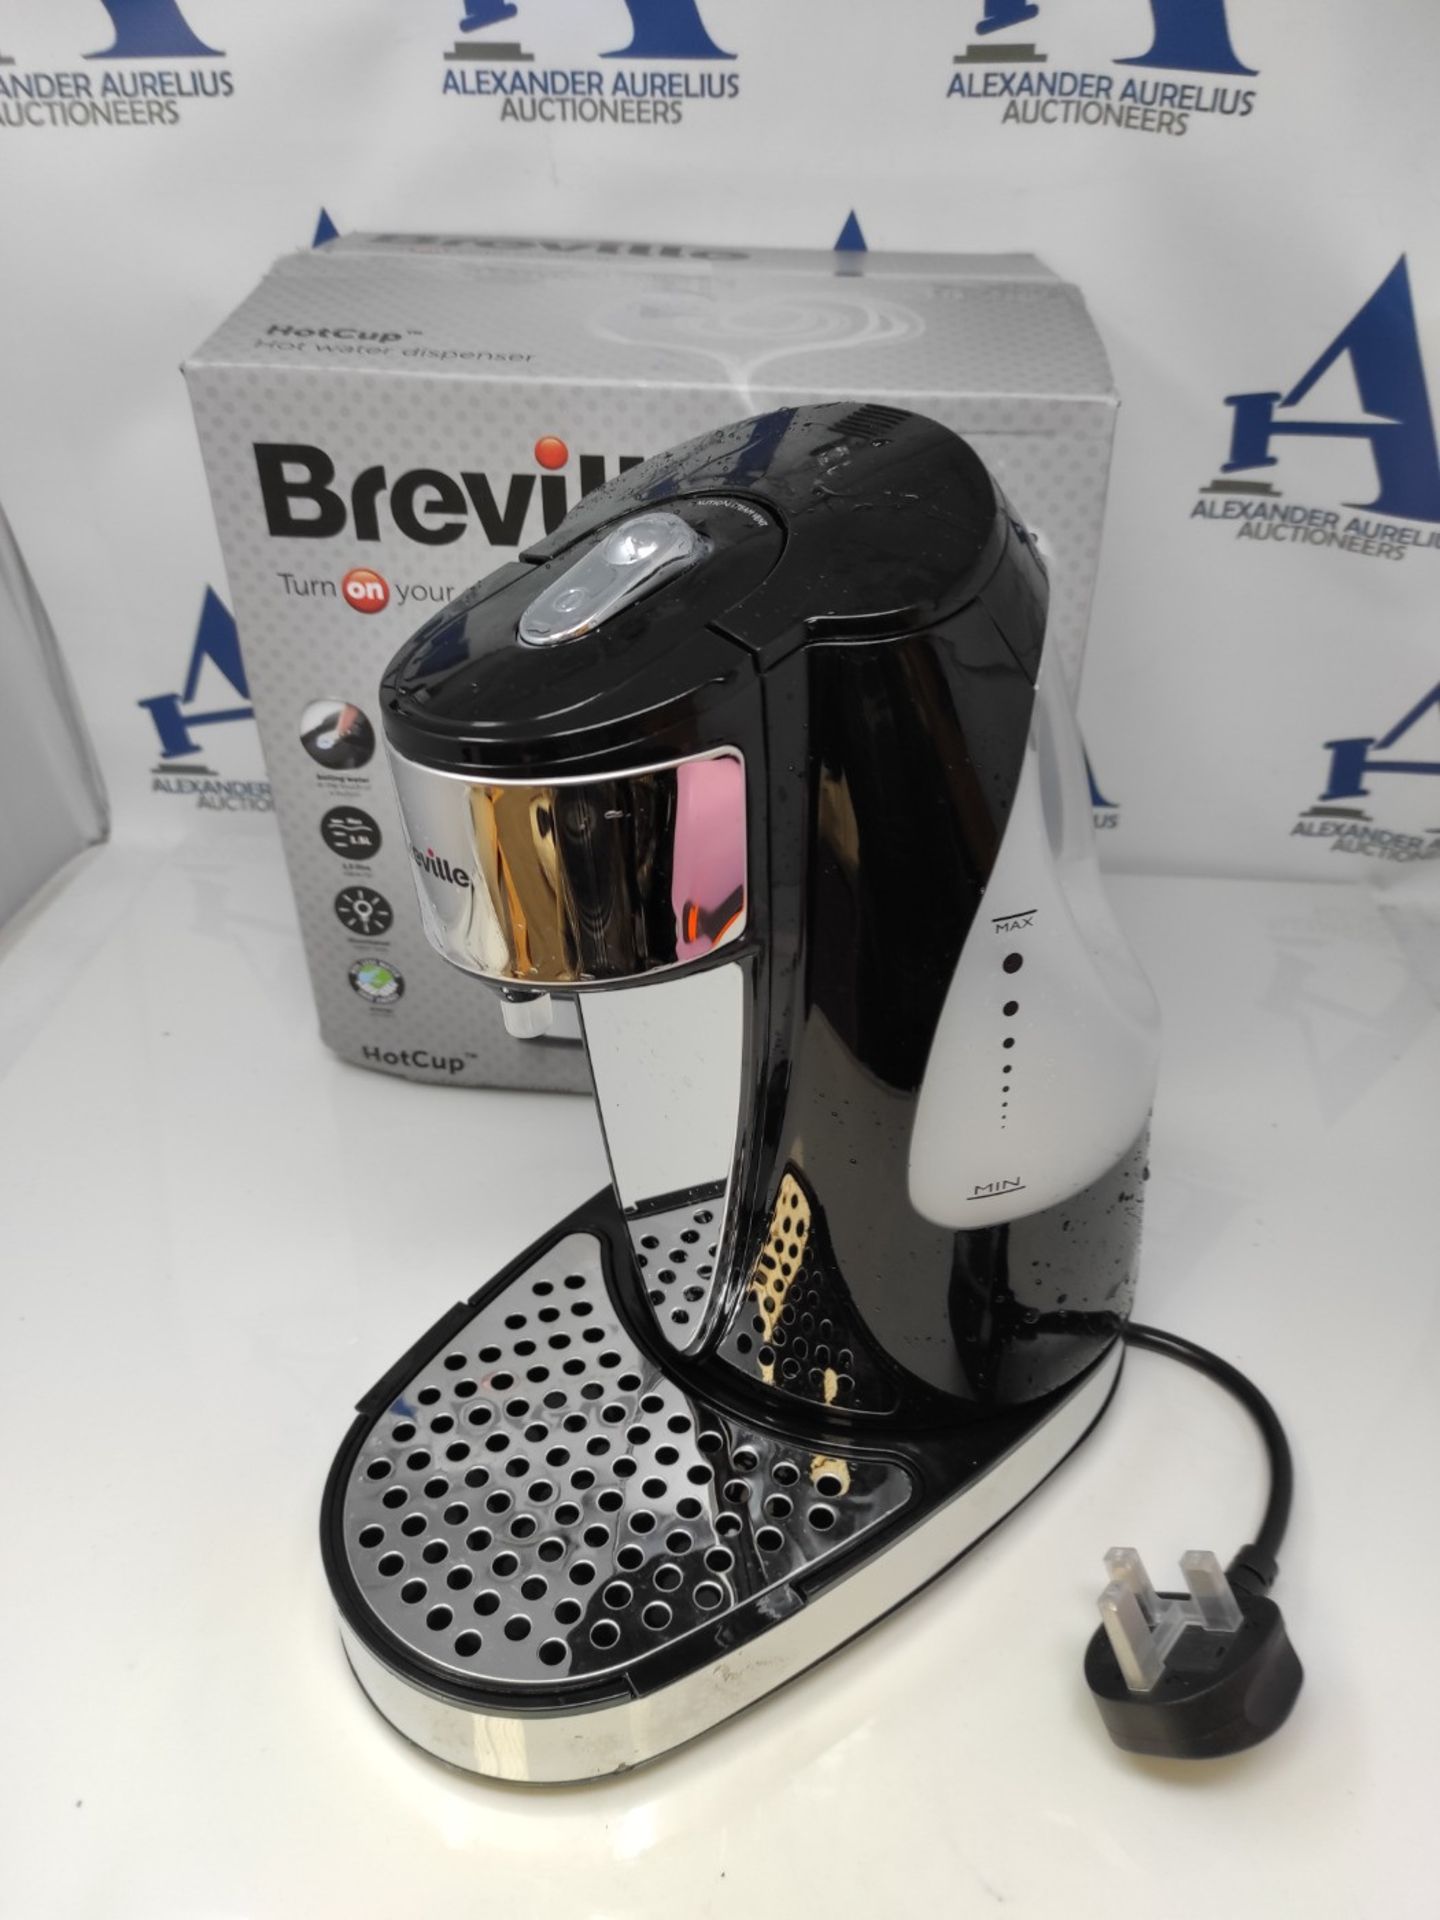 Breville HotCup Hot Water Dispenser | 3kW Fast Boil |1.5L | Energy-Efficient | Gloss B - Bild 2 aus 2